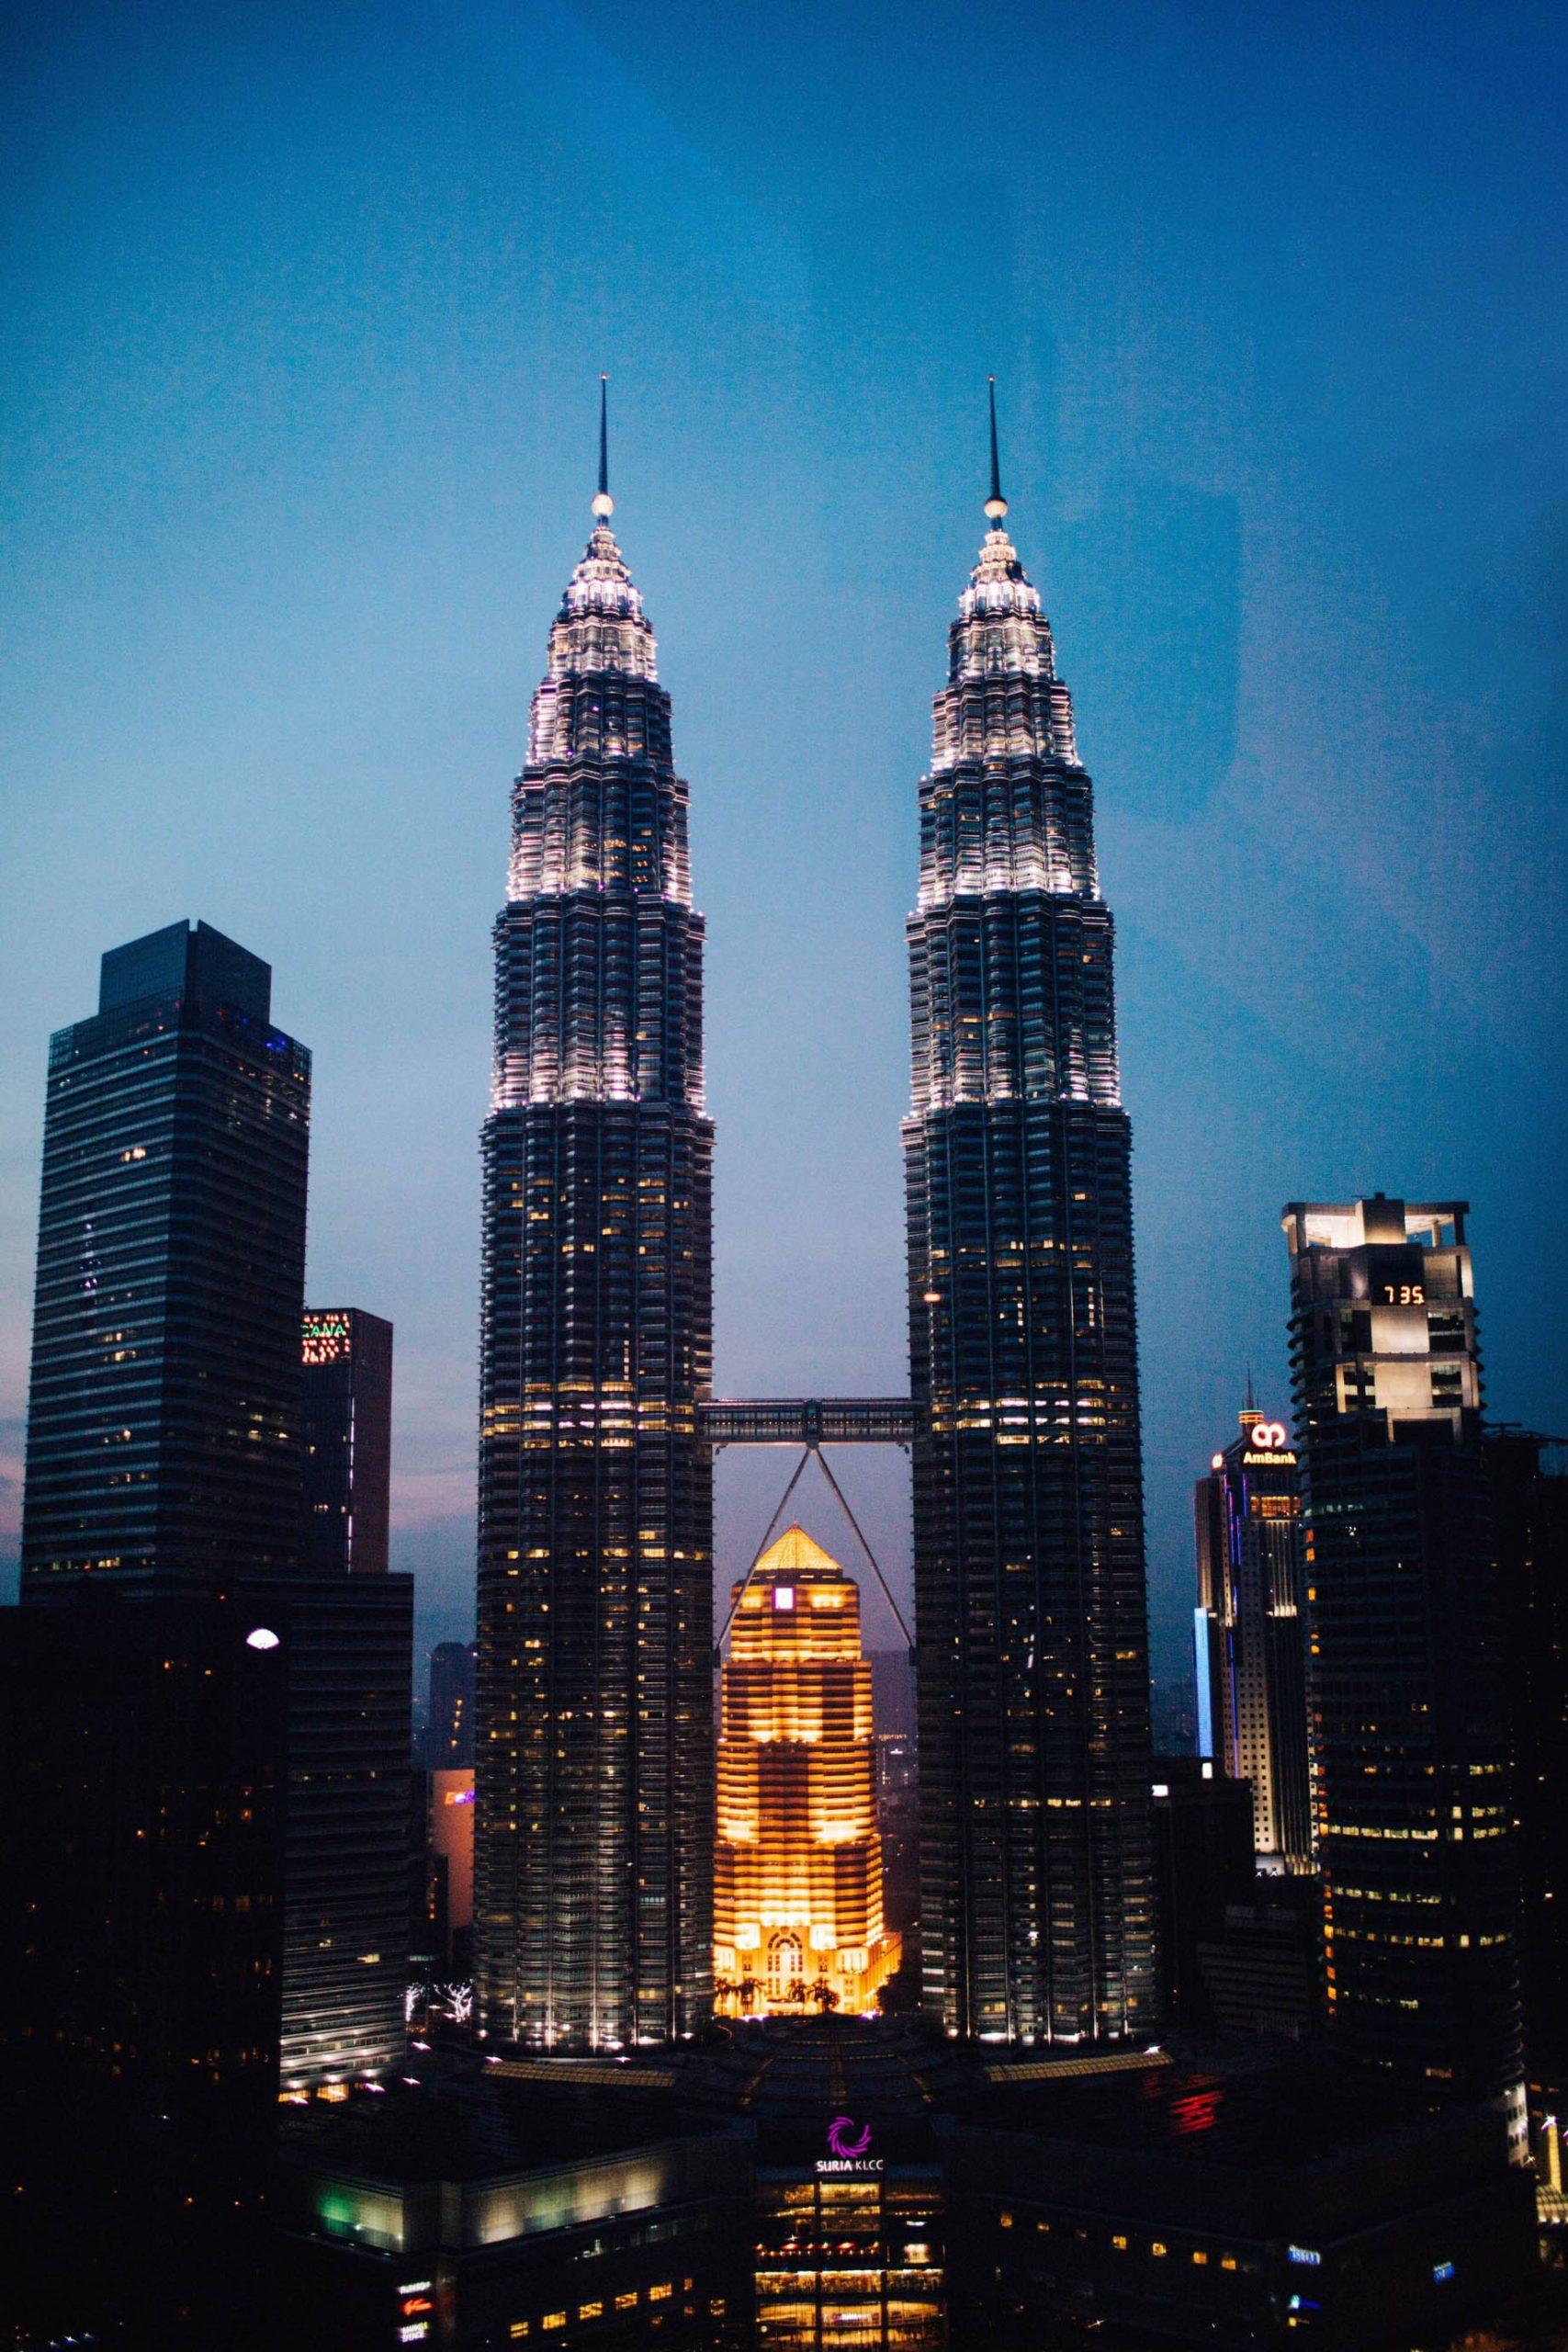 The St. Regis Kuala Lumpur Hotel - Kuala Lumpur, Malaysia - Petronas Twin Towers View